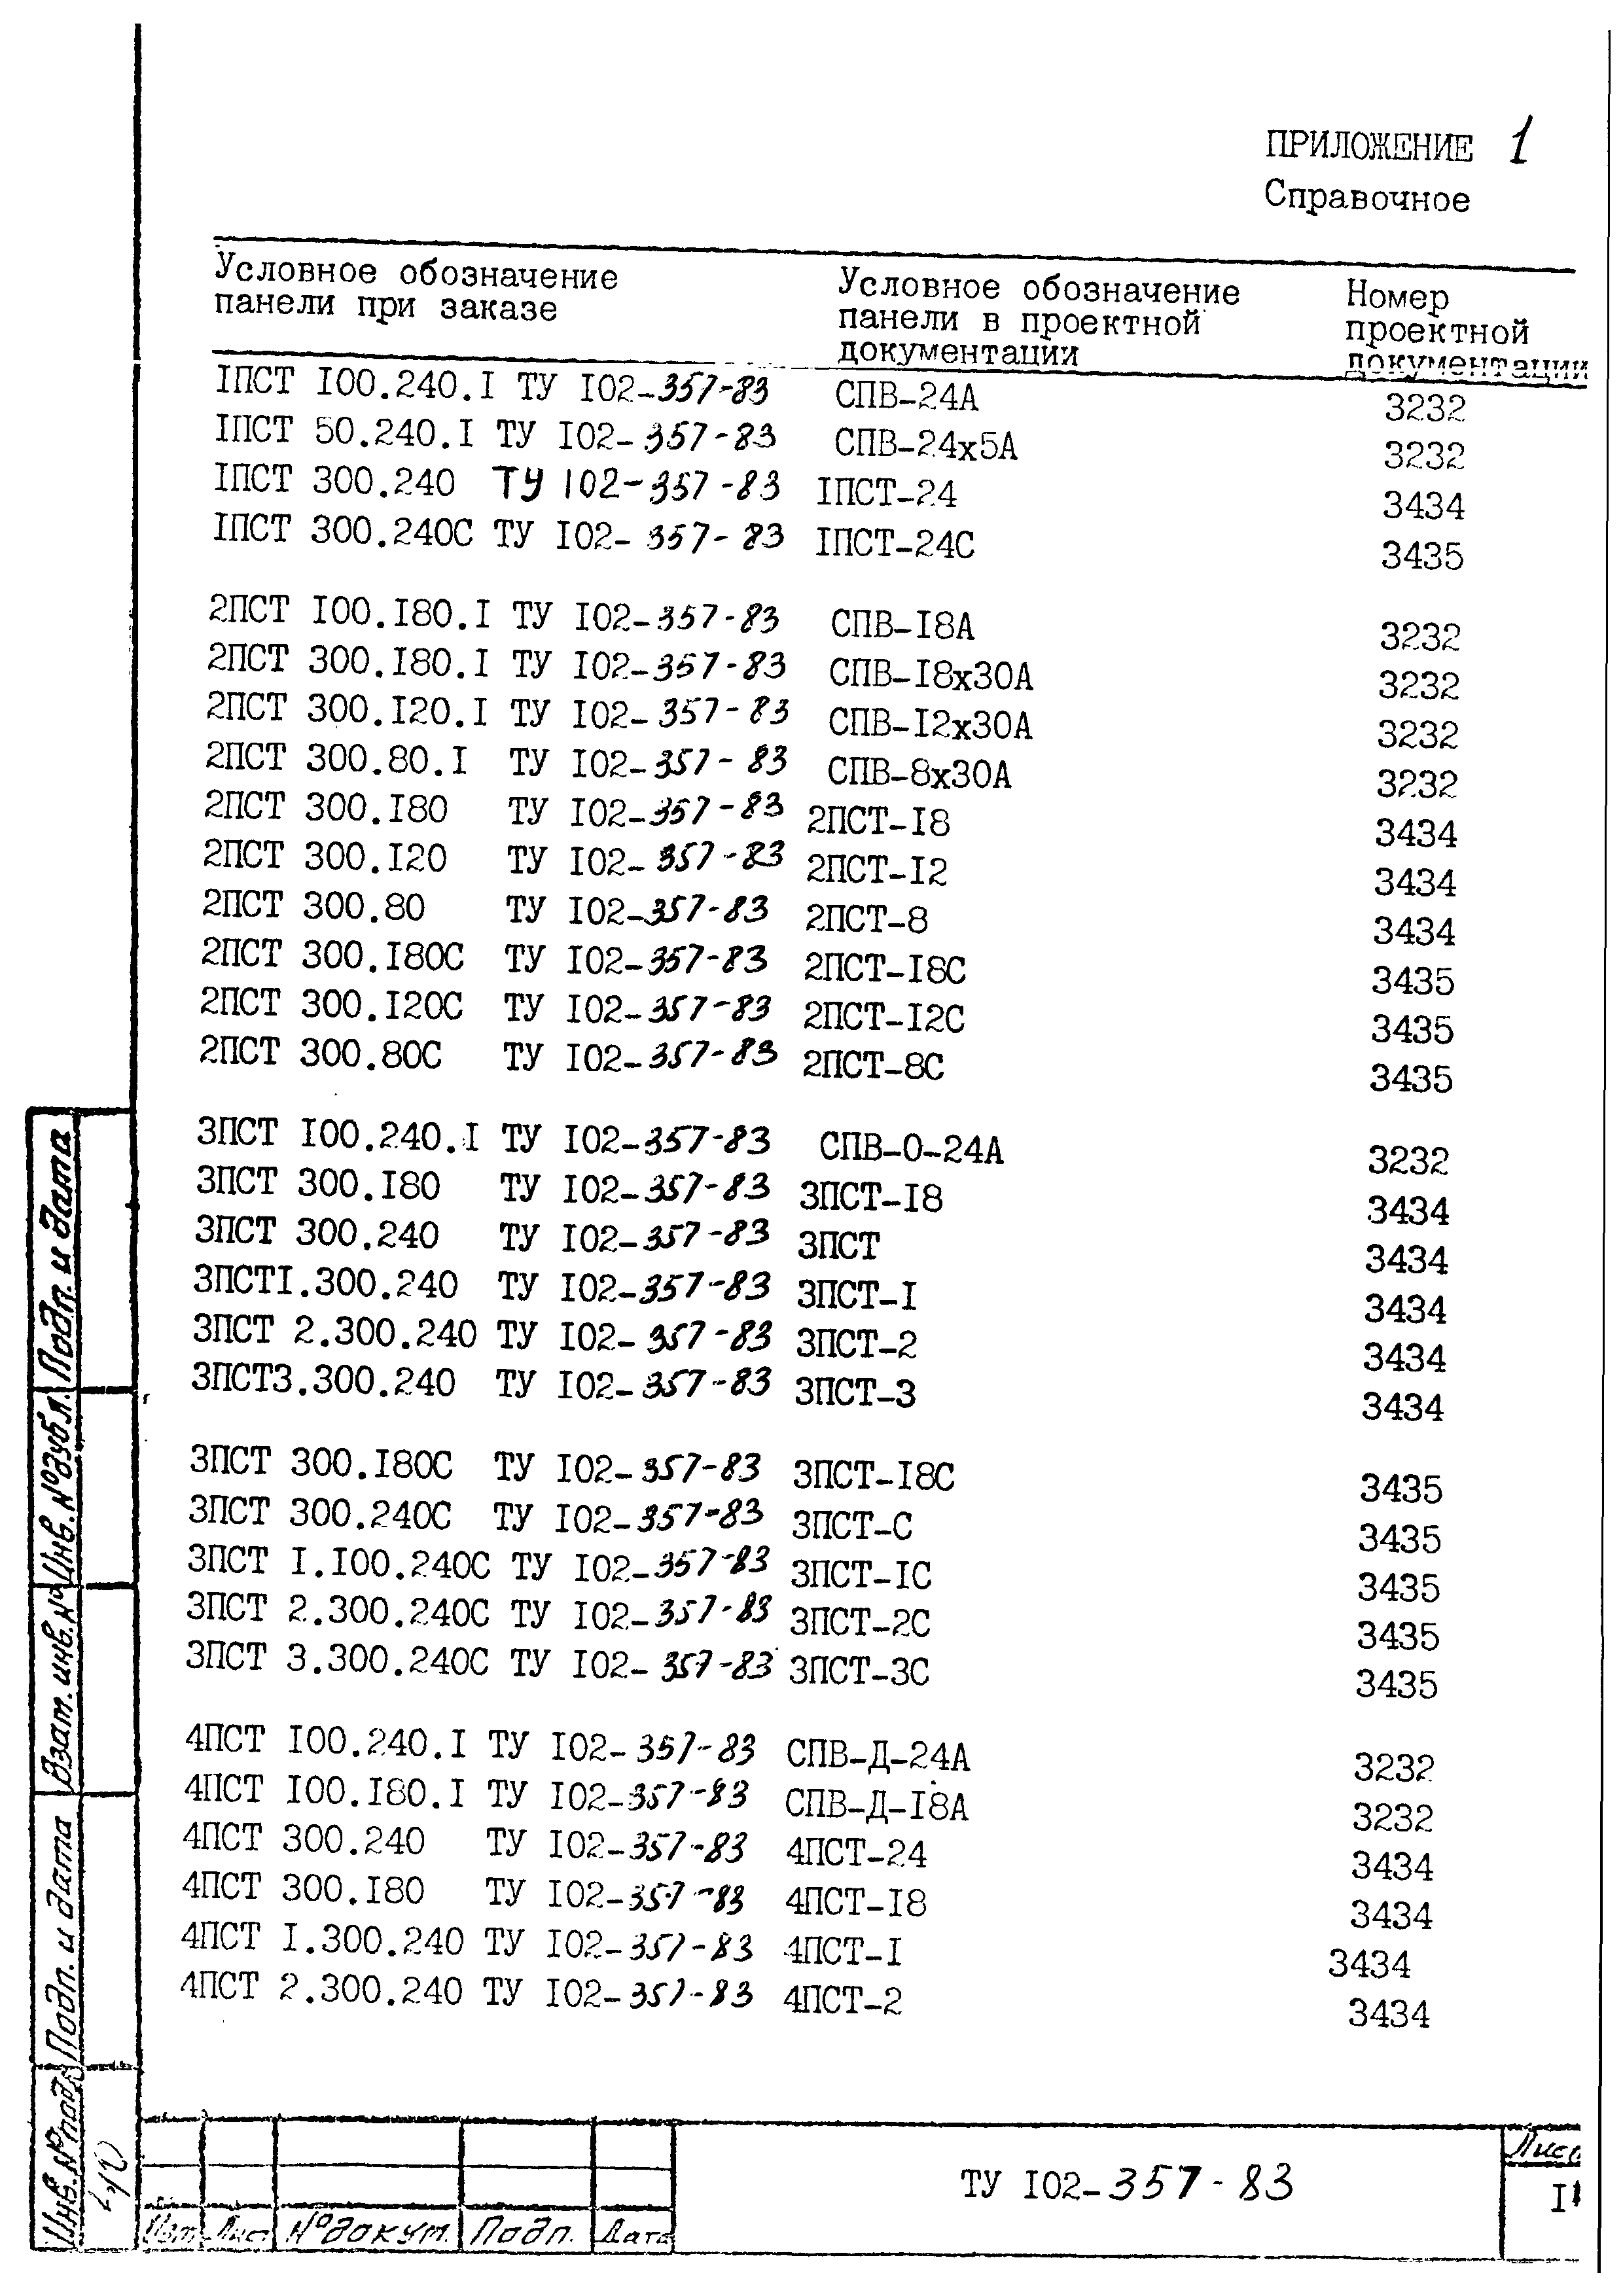 ТУ 102-357-83